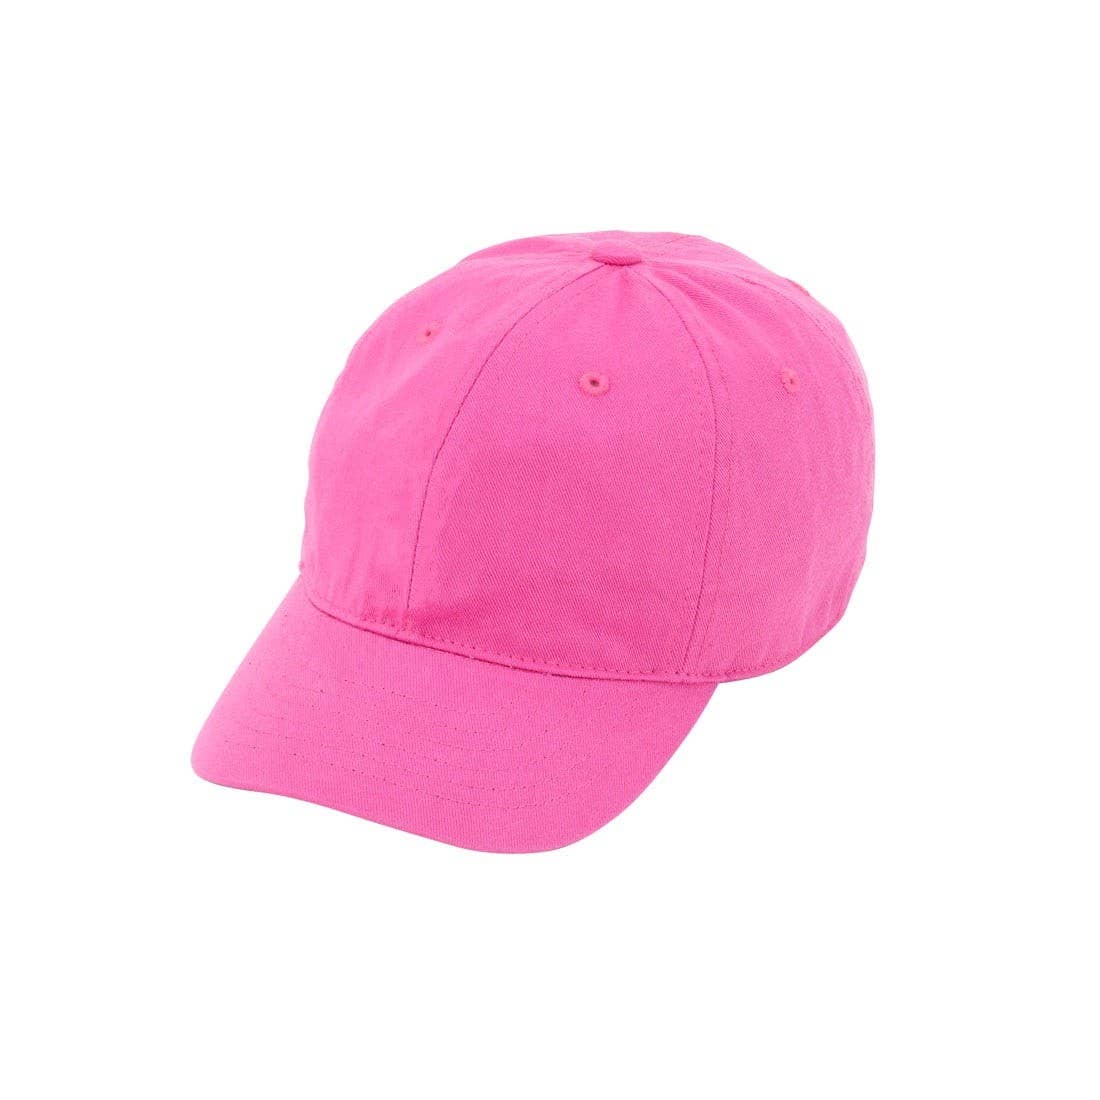 Kids' Cap - Hot Pink